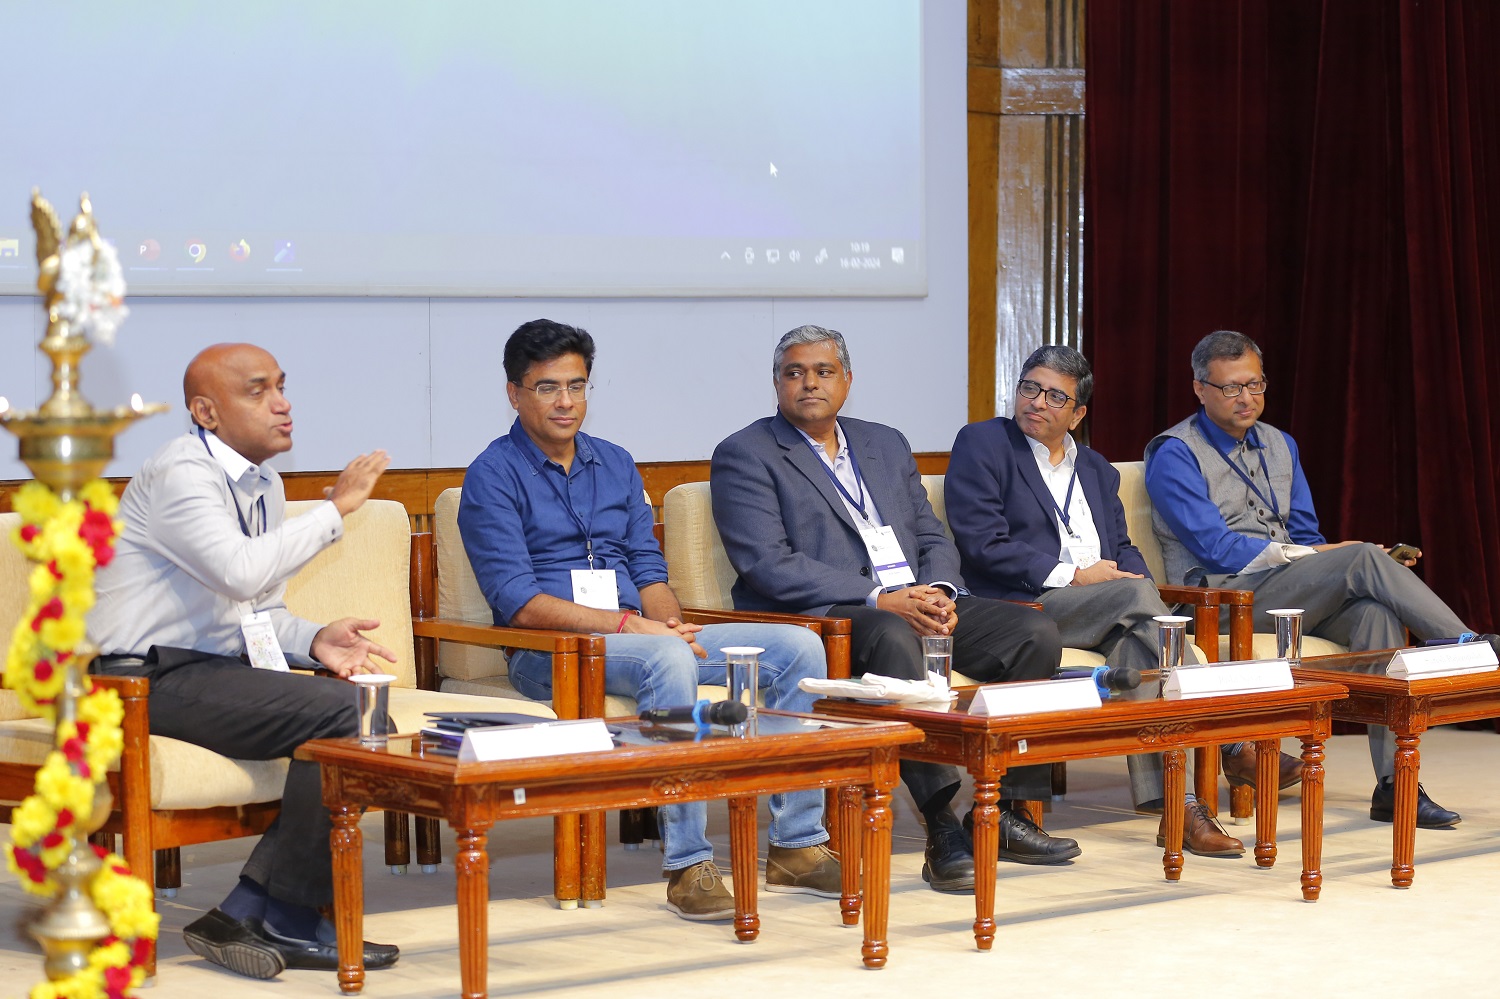 Haragopal Mangipudi, Global Board Member, ISPMA, moderates the panel discussion on, ‘Product Innovation and the Emerging Role of AI’. (L-R) Haragopal Mangipudi; Viraj Tyagi, CEO, eGov Foundation; Rishi Nayar, SVP & Country Head, Ellucian; Suresh Rajagopalan, CEO, Wibmo, a PayU Company, and Somshubro Pal Choudhury, Partner, Bharat Innovation Fund.